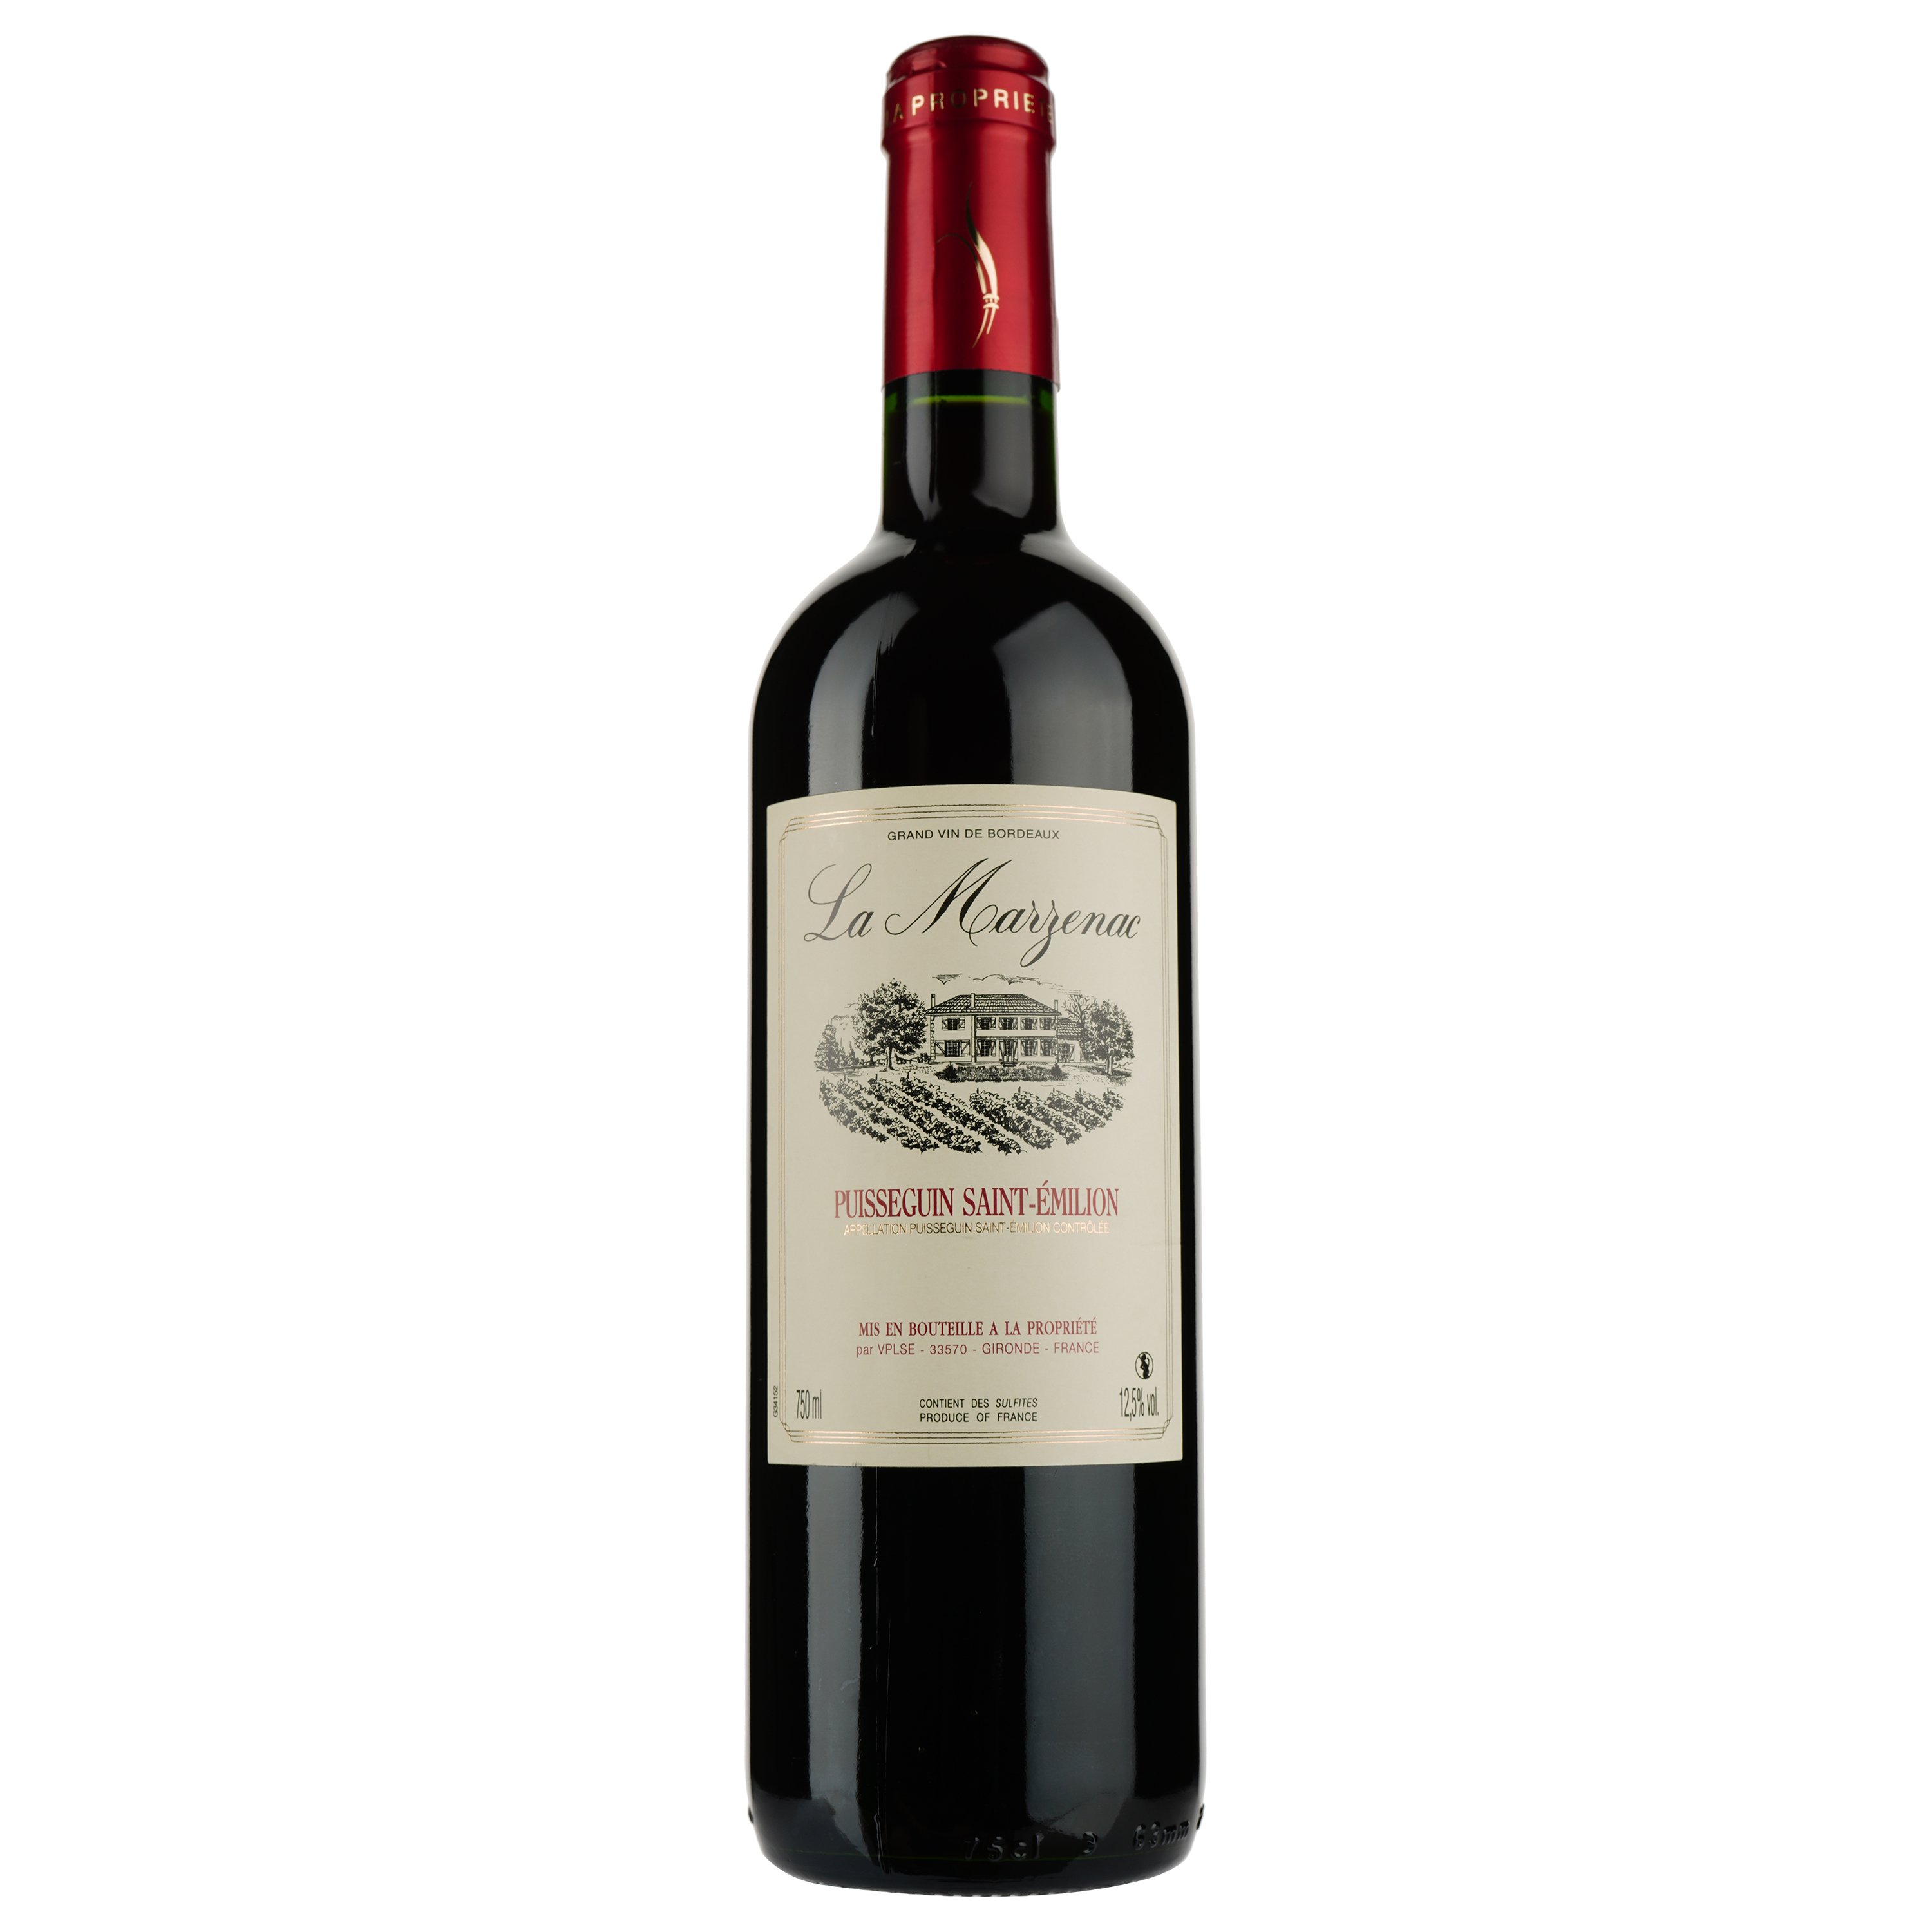 Вино La Marzenac AOP Puisseguin Saint-Emilion 2017, красное, сухое, 0,75 л - фото 1